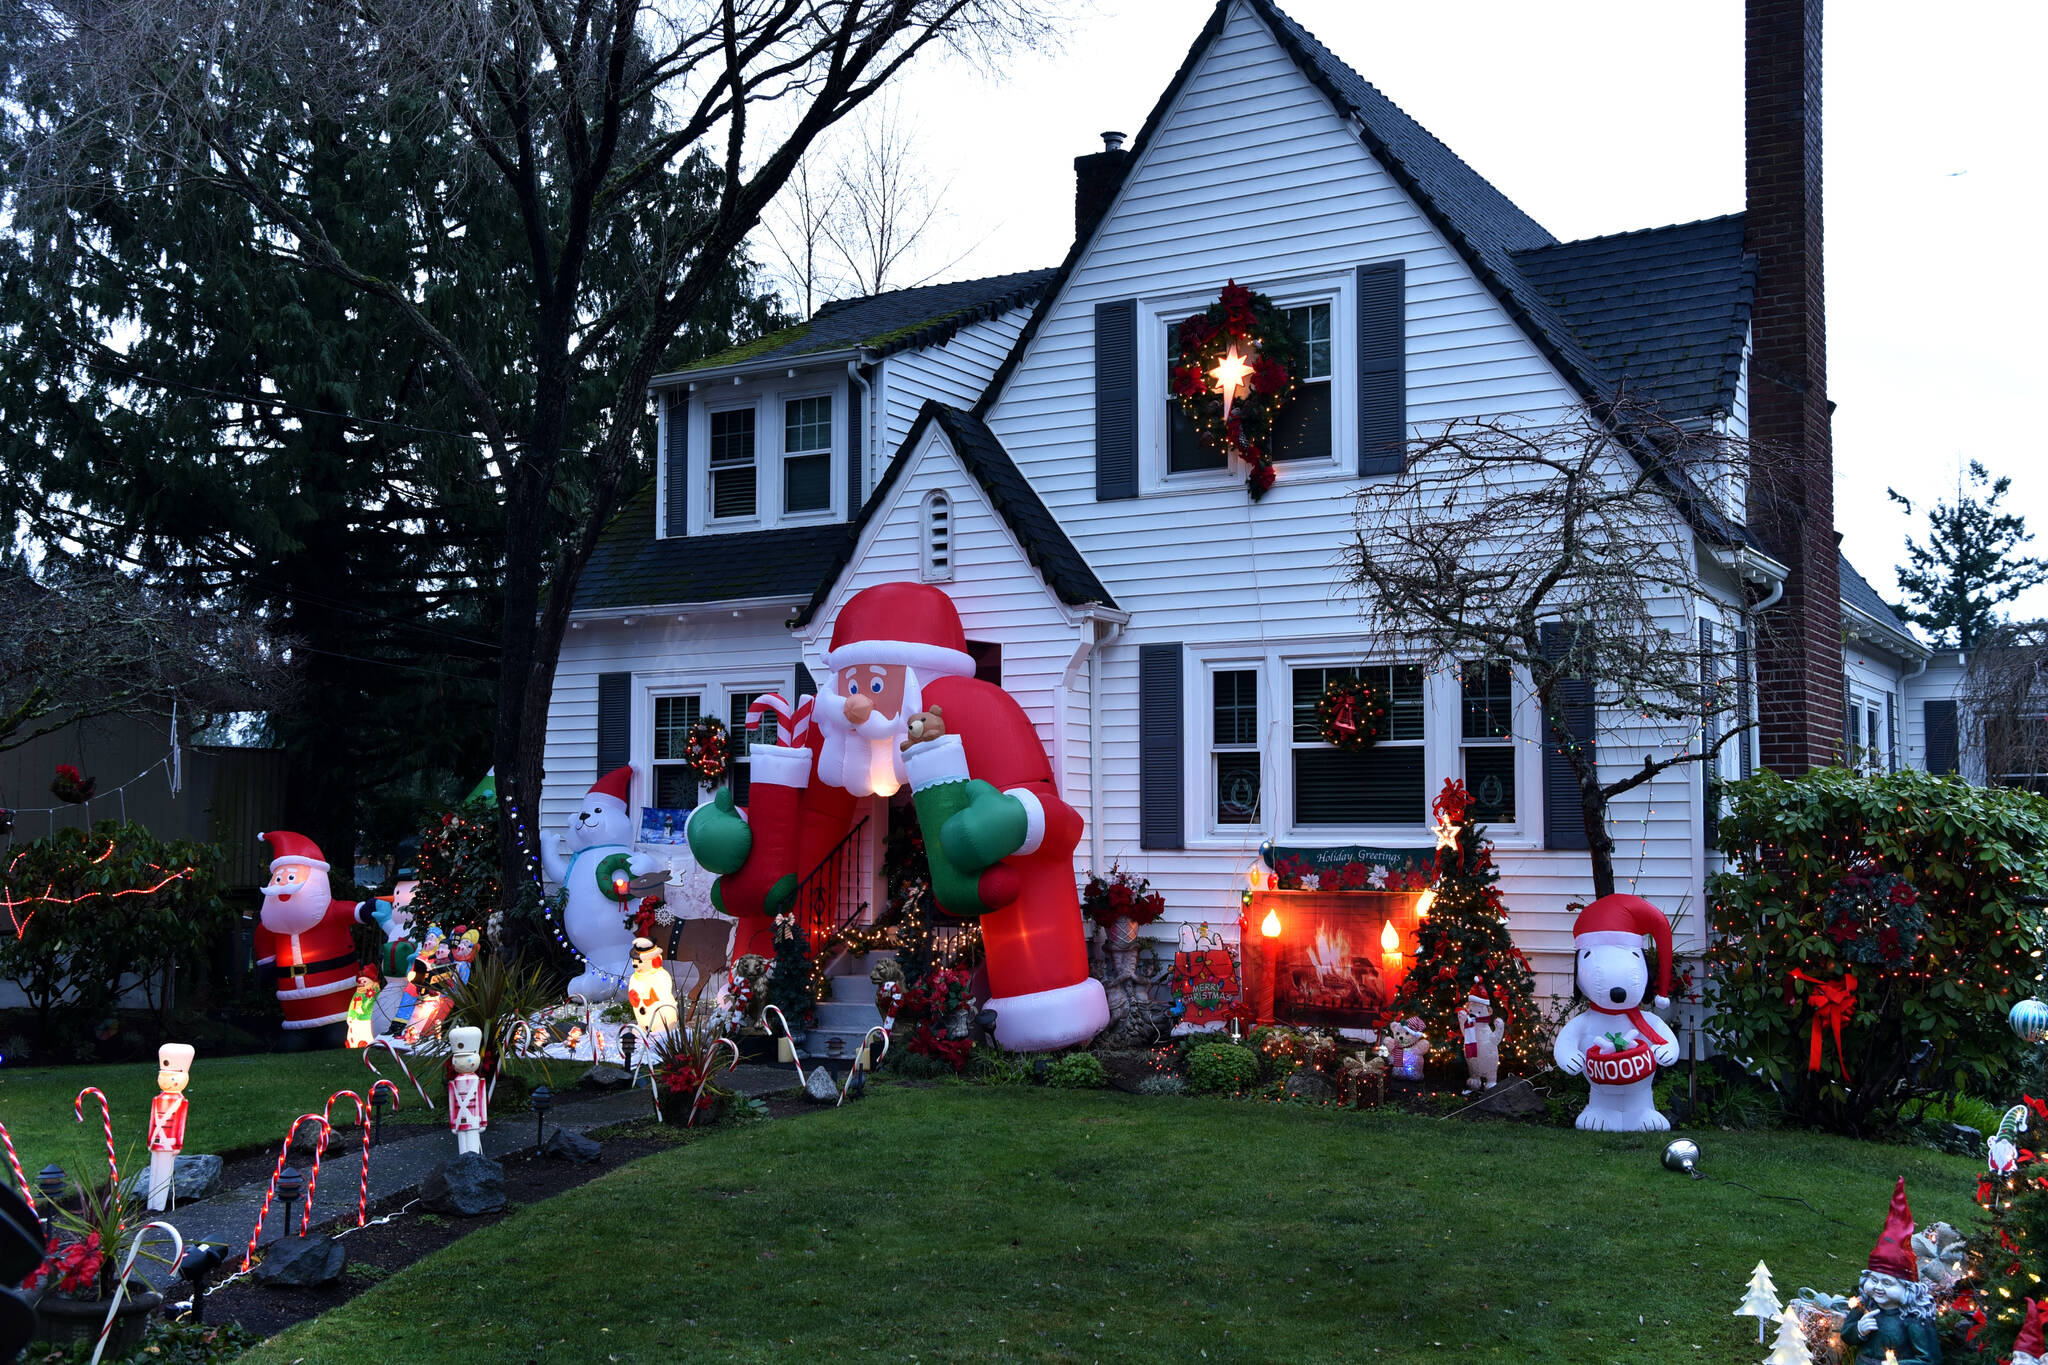 Santa greets visitors at the front door.